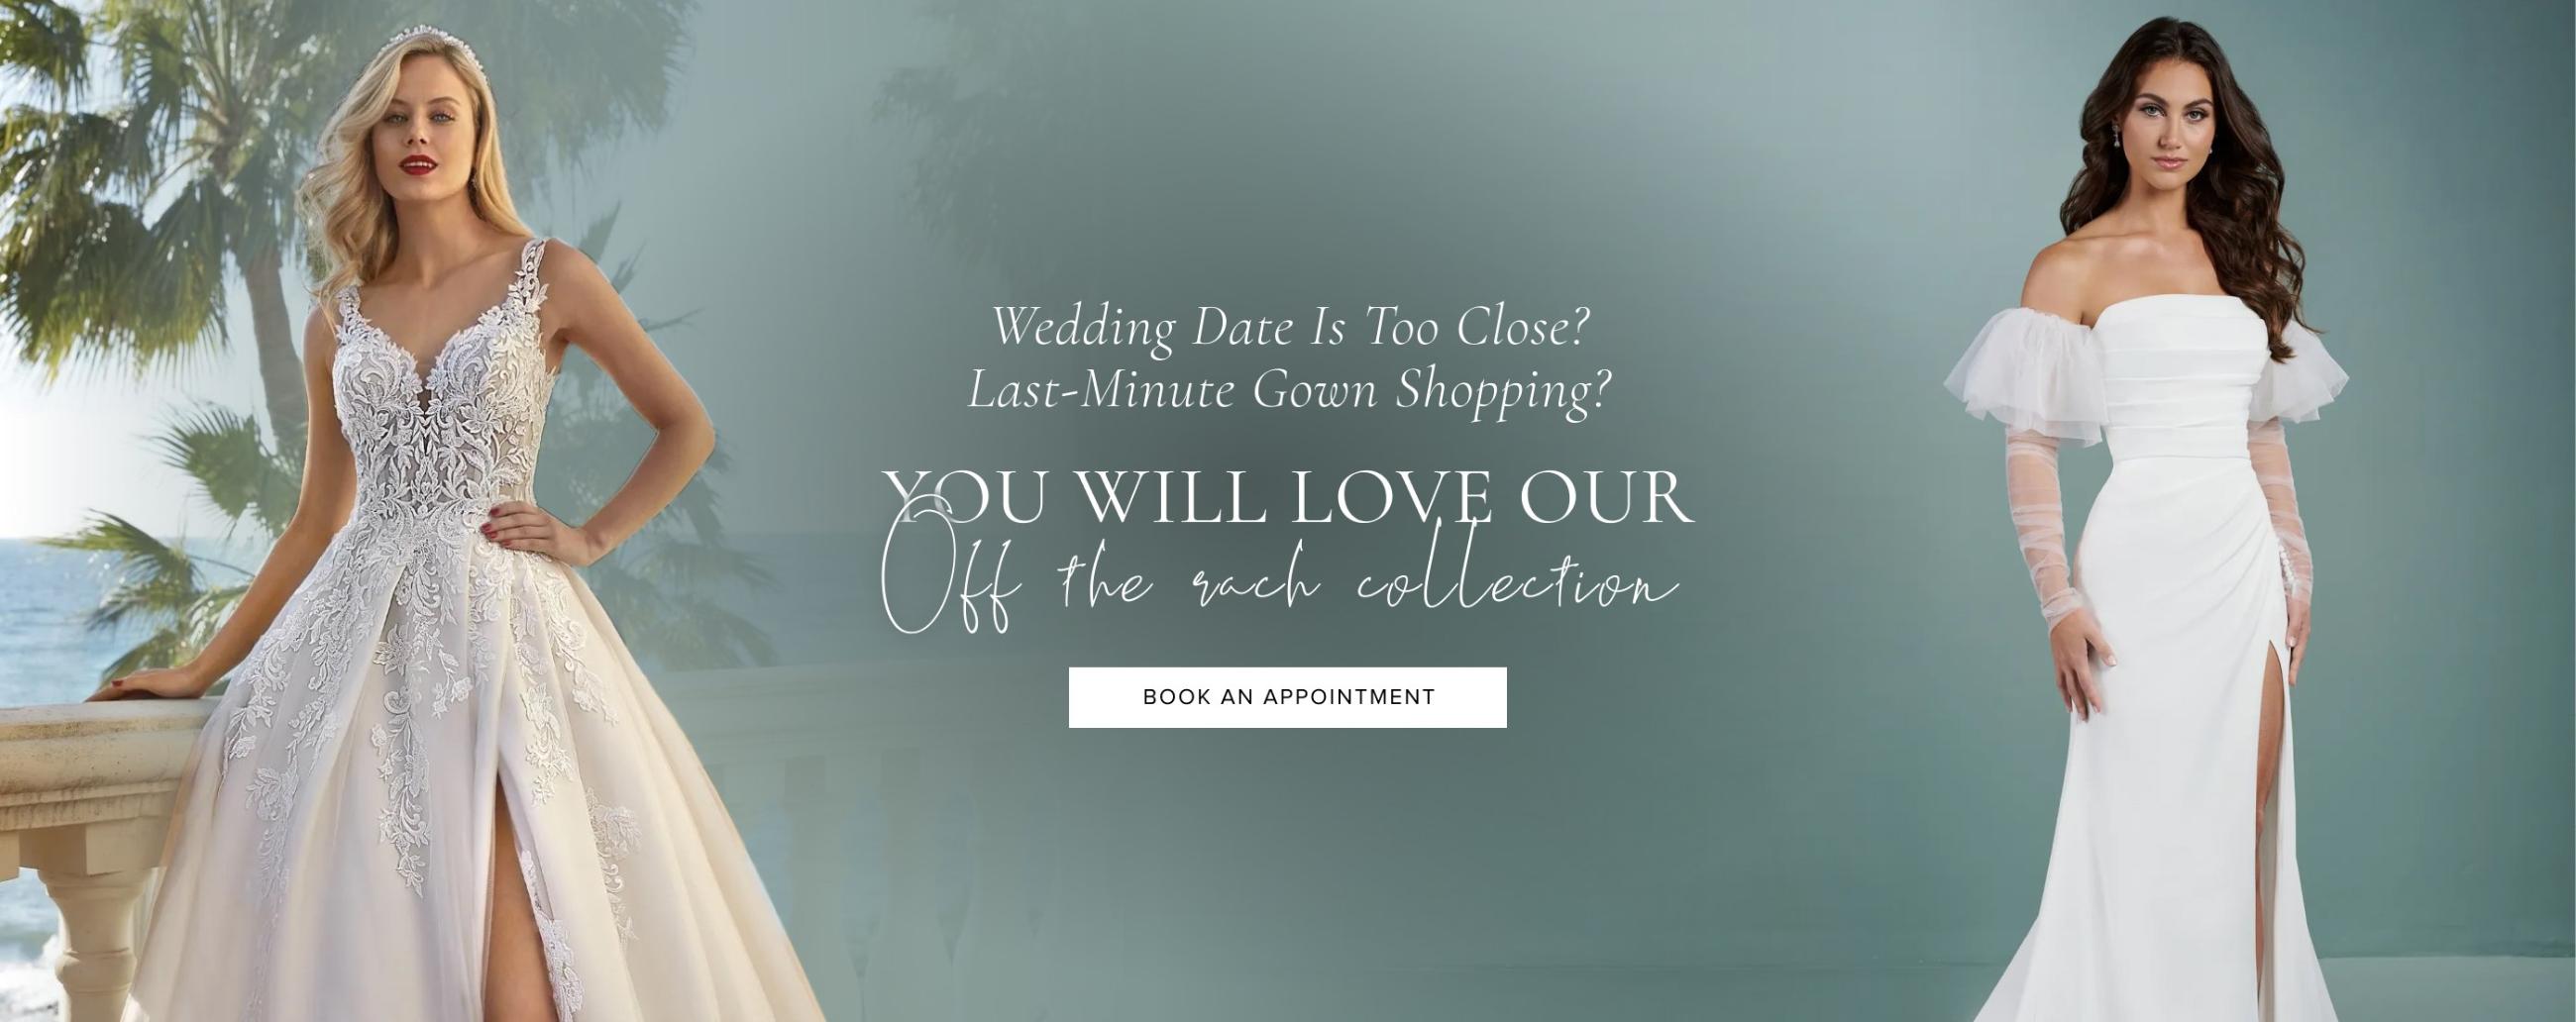 Wedding Date is too close? Banner for desktop